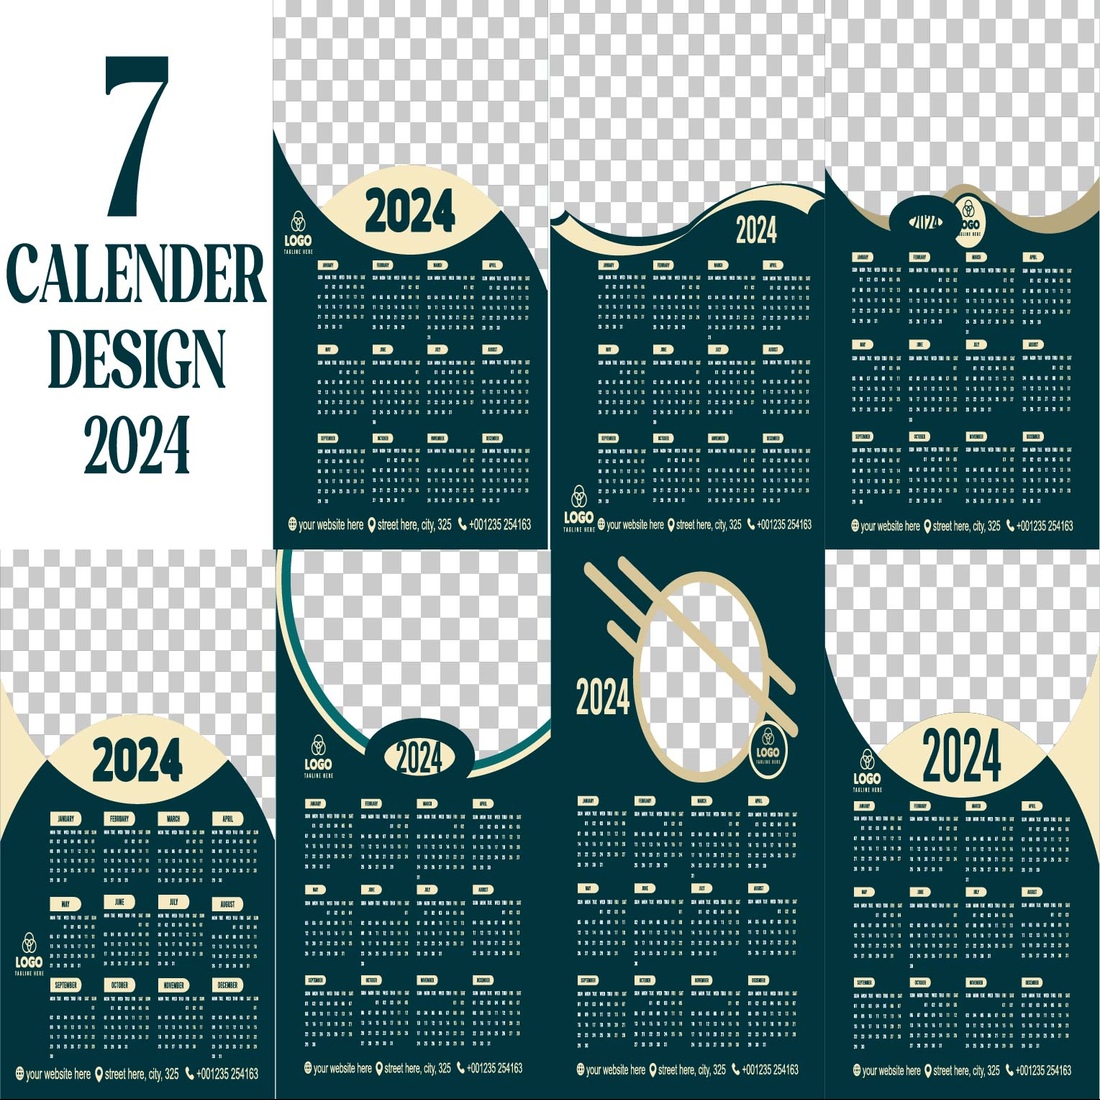 2024 Calender design cover image.